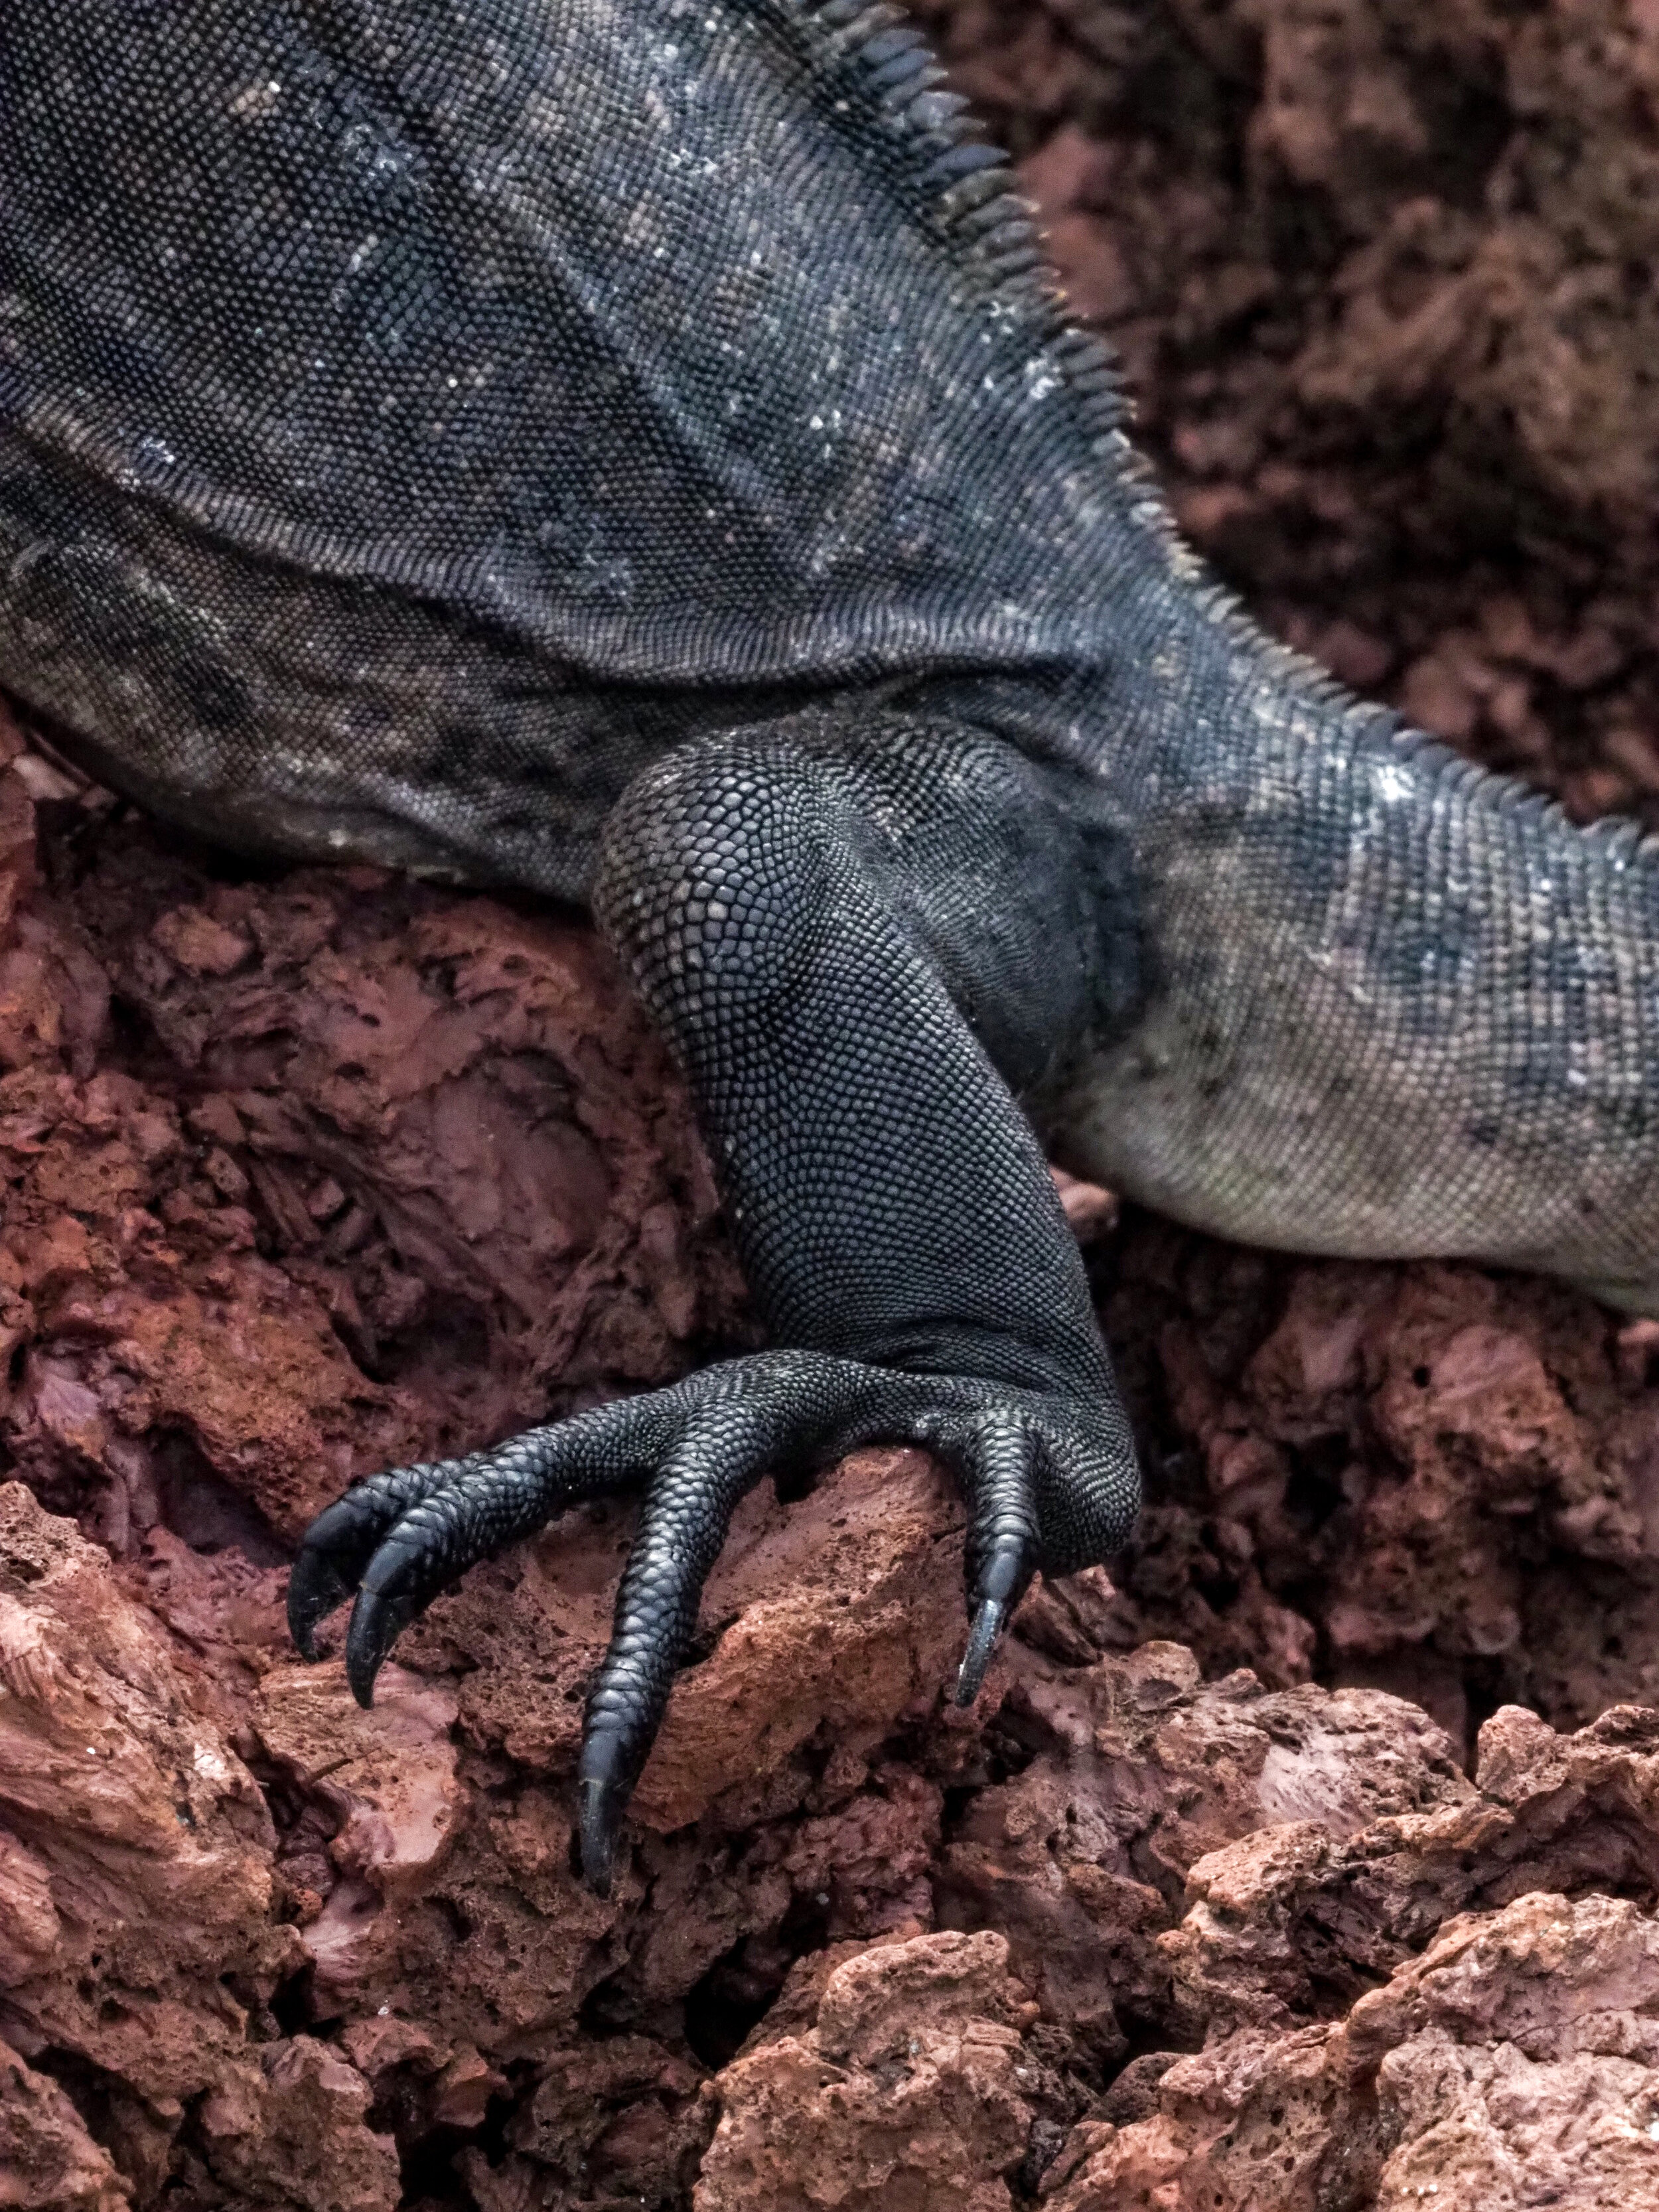  iguana scales, Rabida Island 